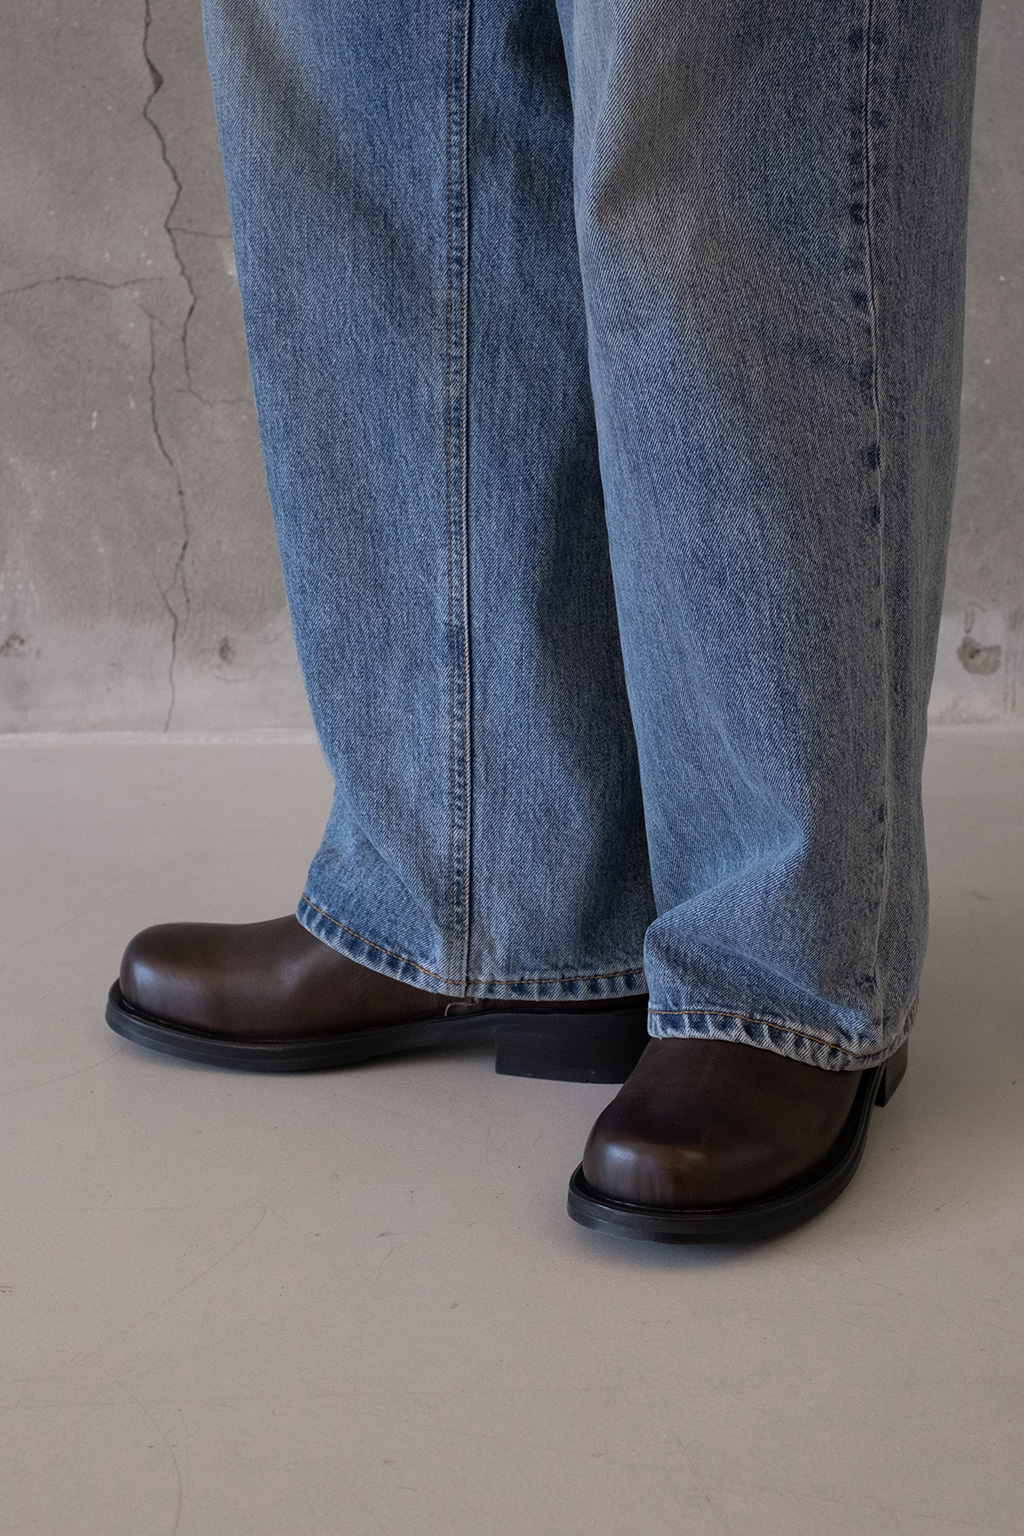 Cinderella crack boots (brown)